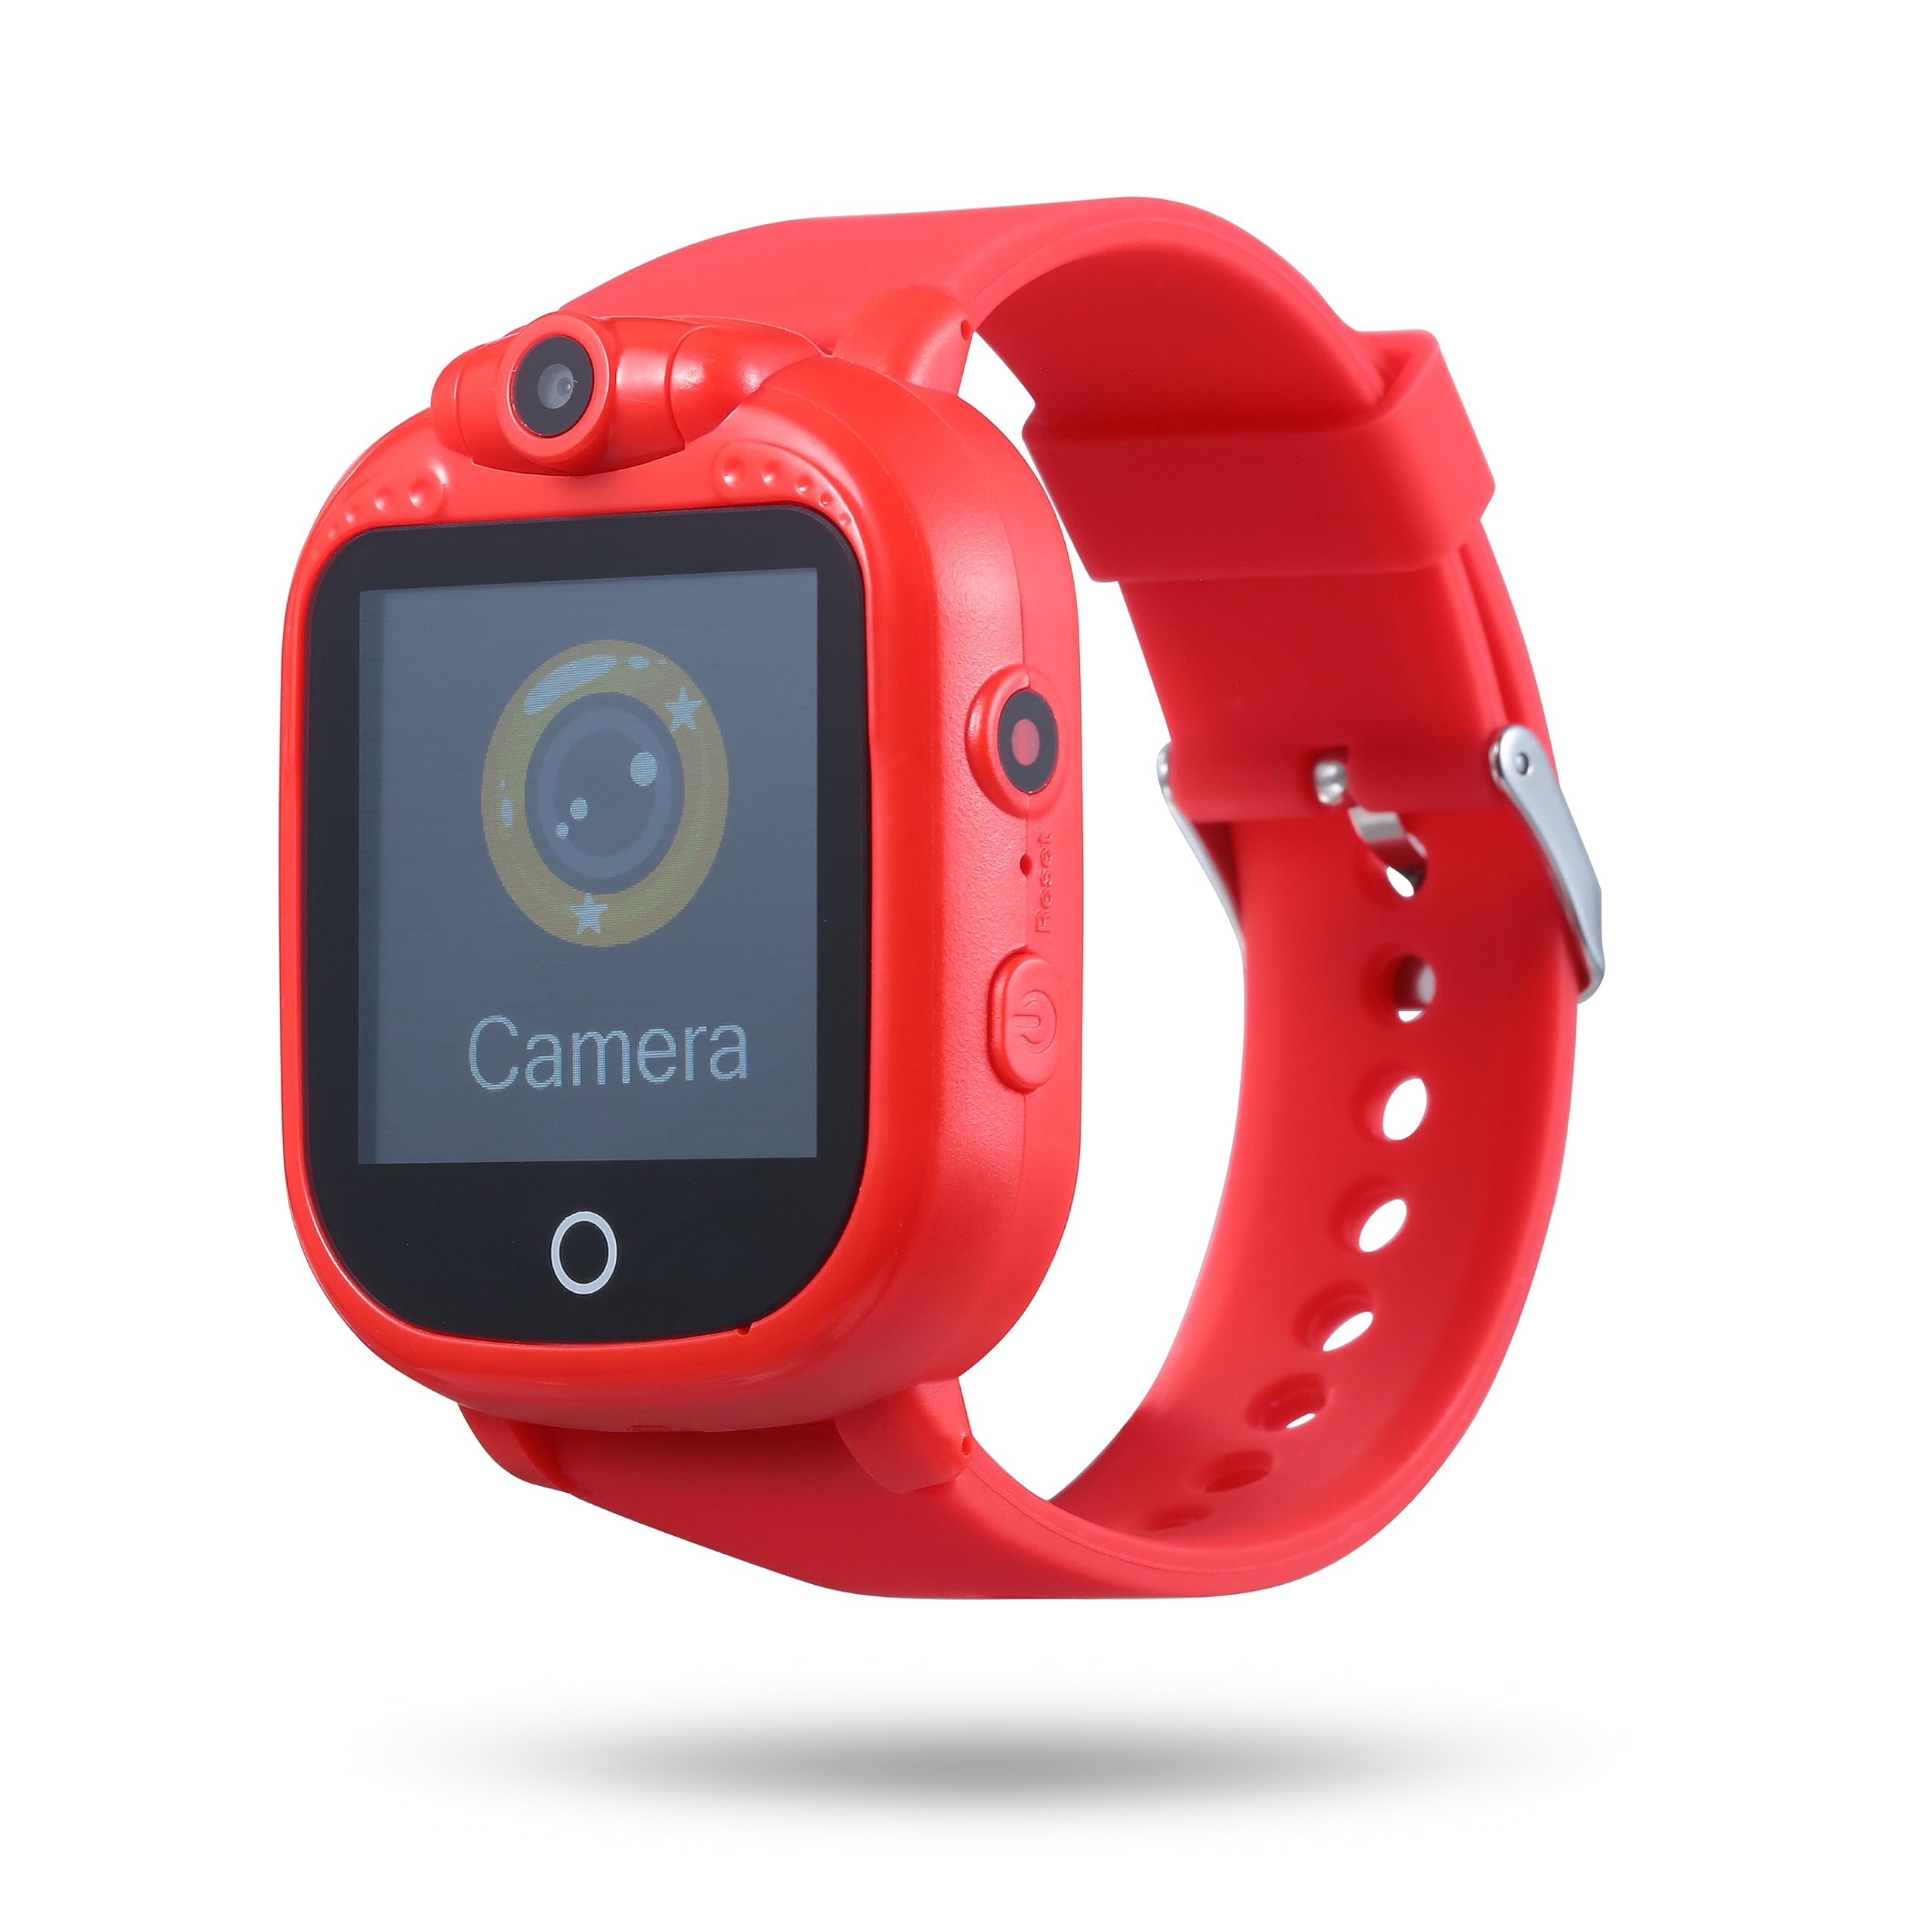 Vivitar Smart Watch for Kids - Bluetooth Connectivity, 1.54